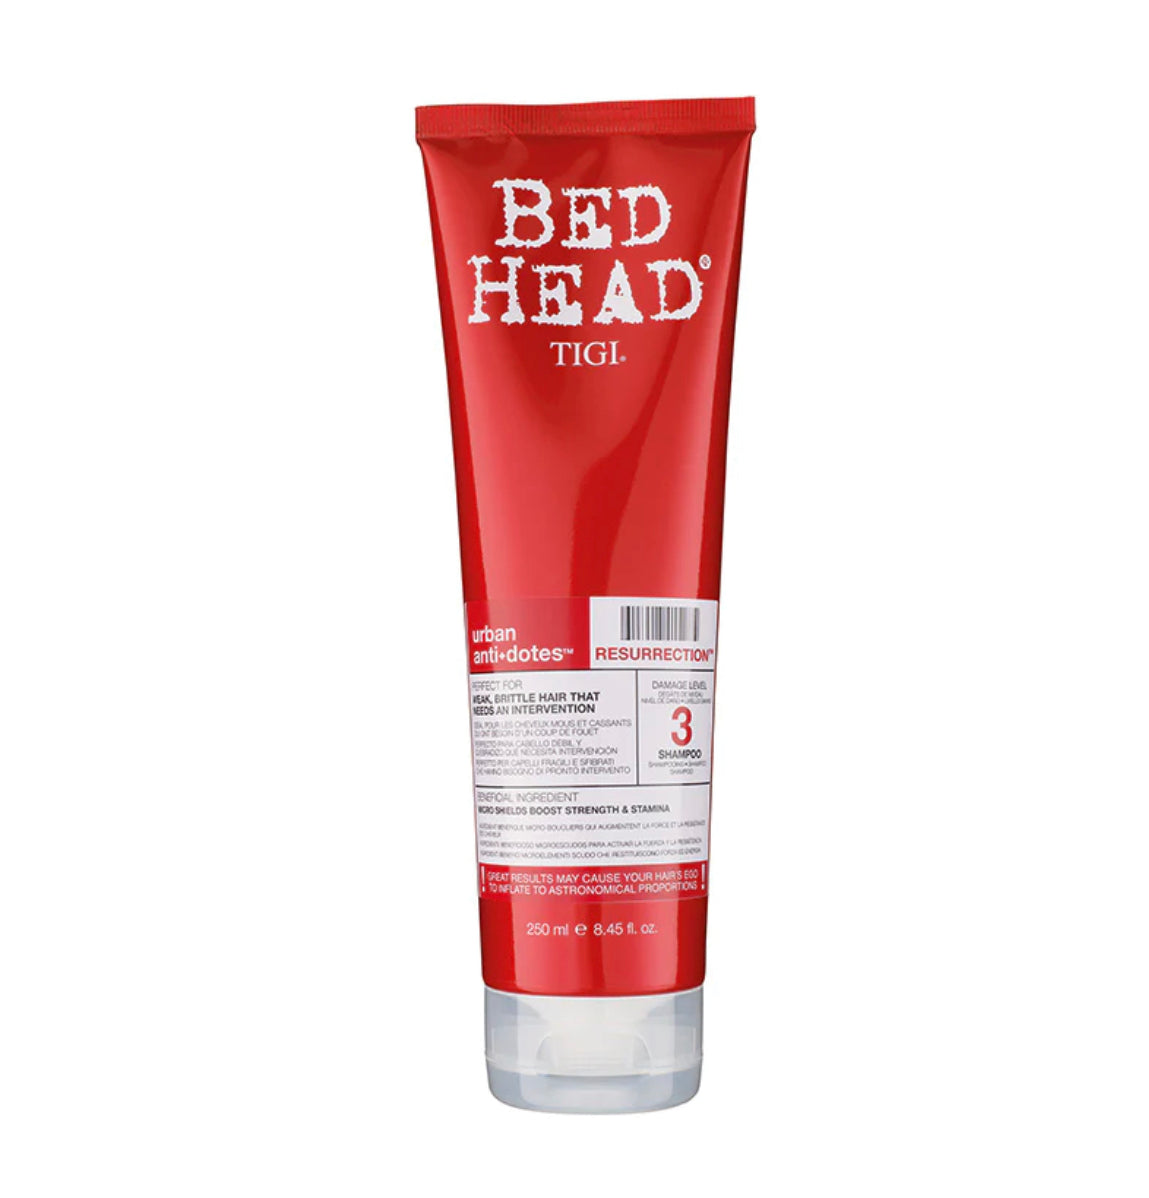 Bed head Tigi  shampoo